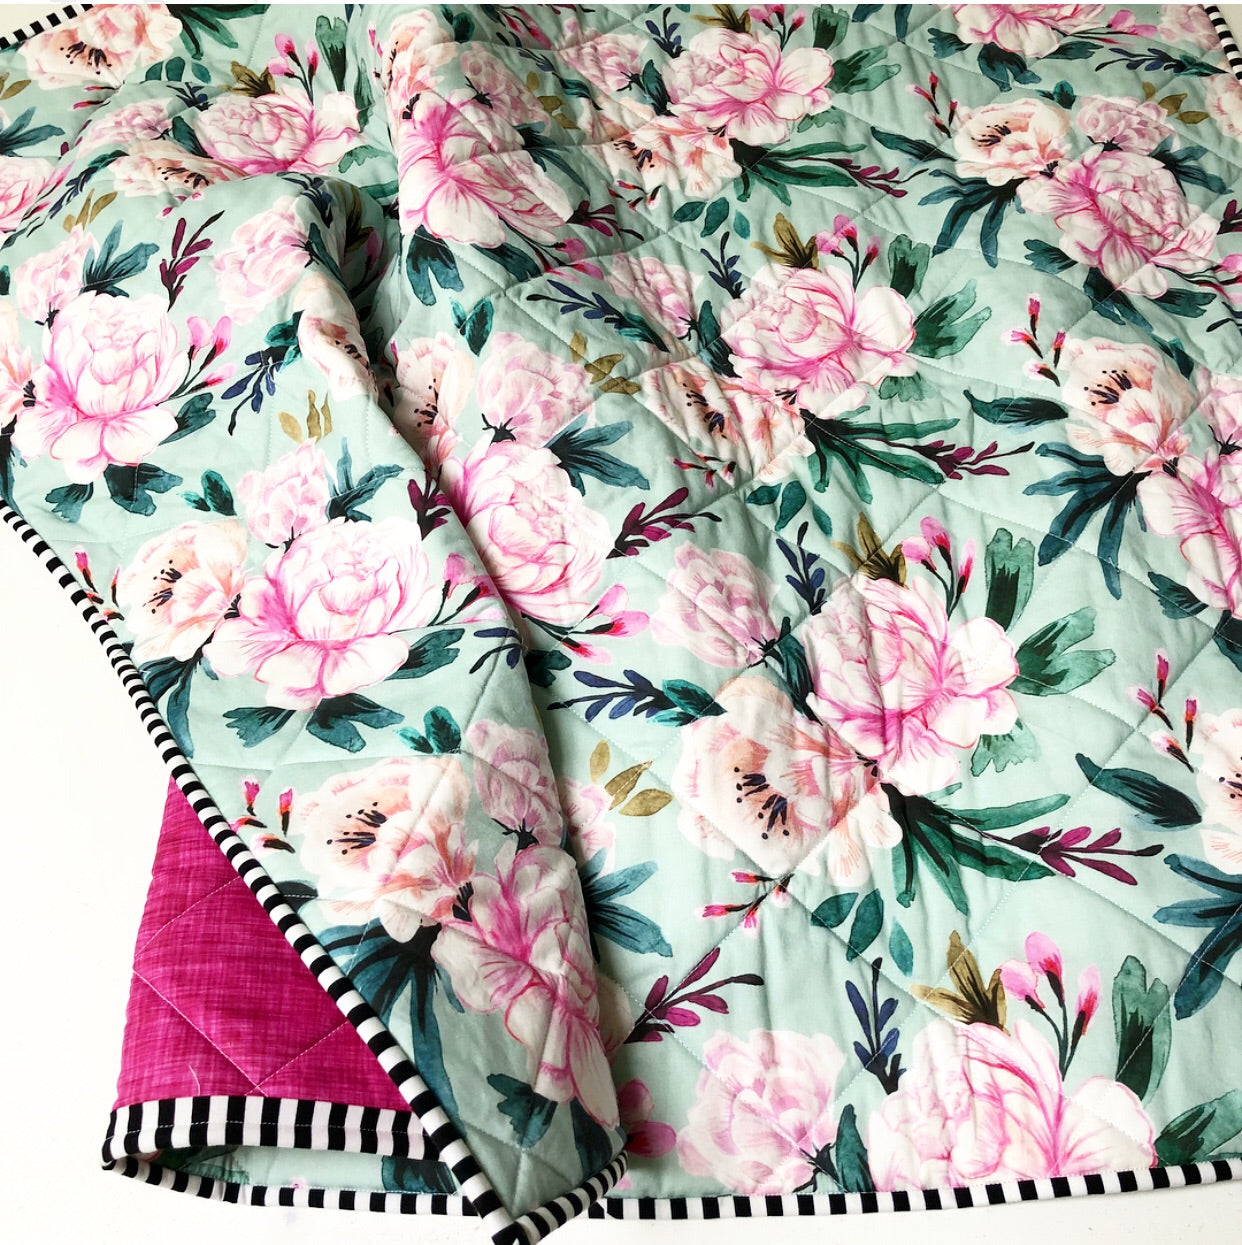 Odette Floral Wholecloth Quilt - Made to Order | Wild Littles